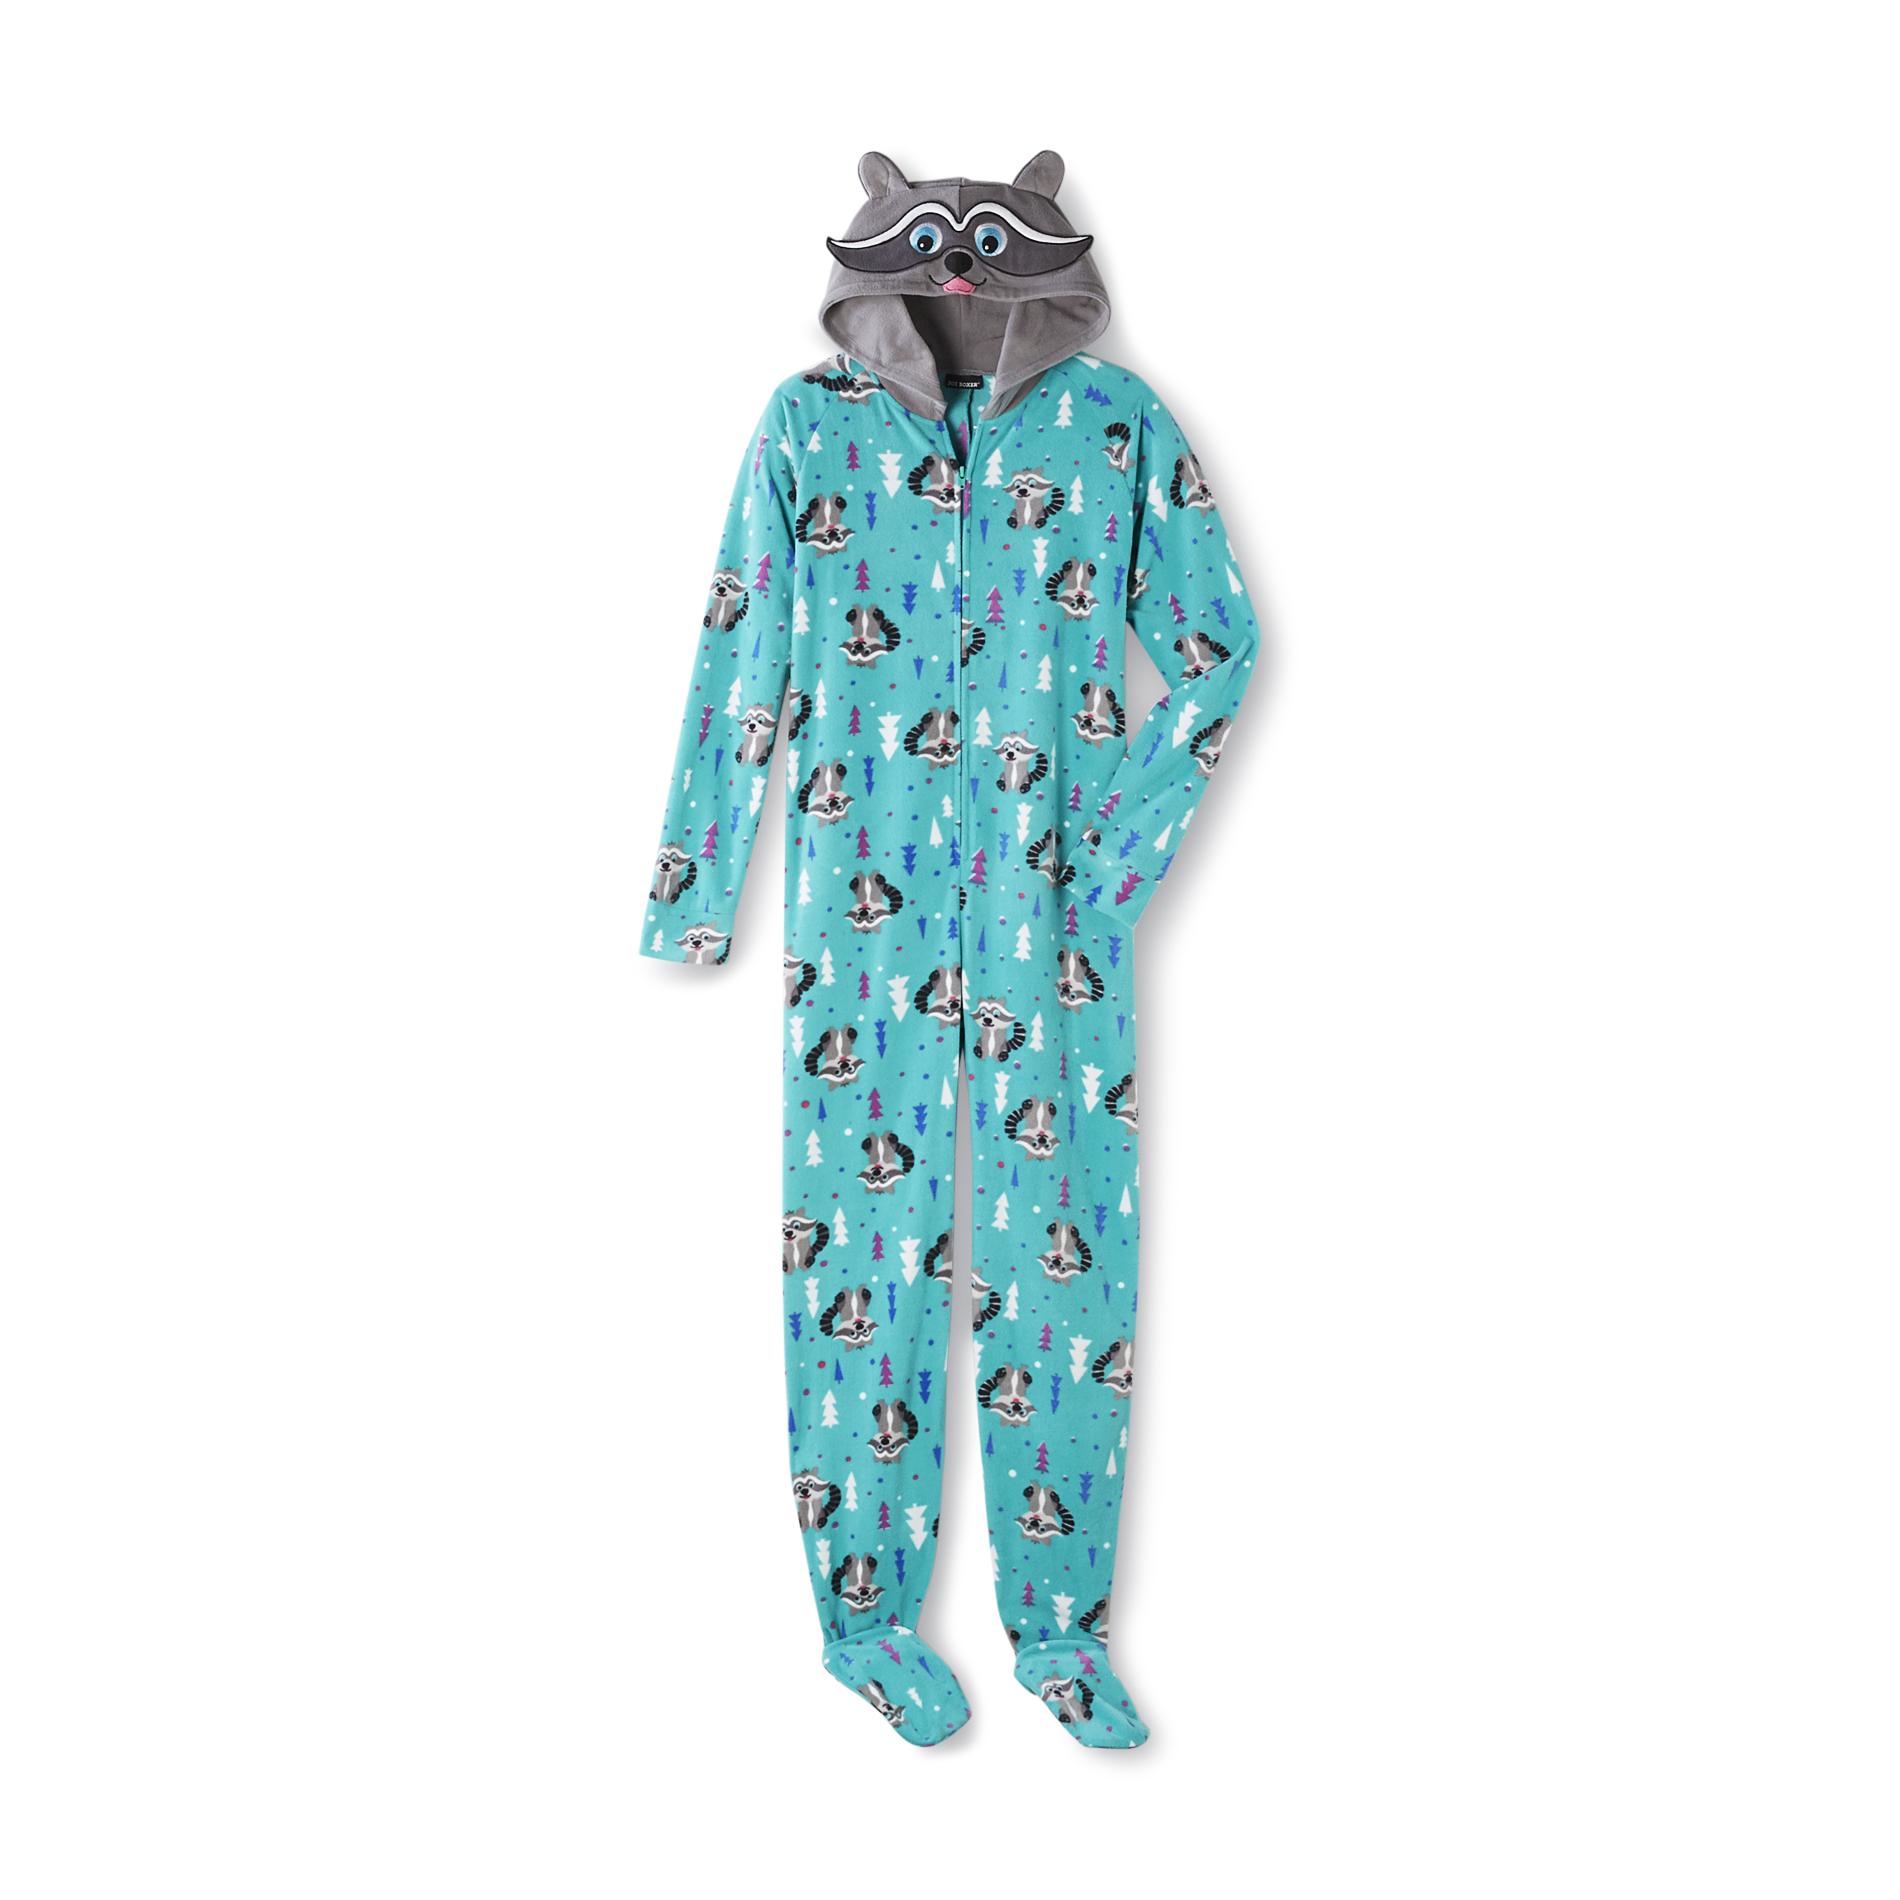 Joe Boxer Women's Footed Sleeper Pajamas - Raccoon